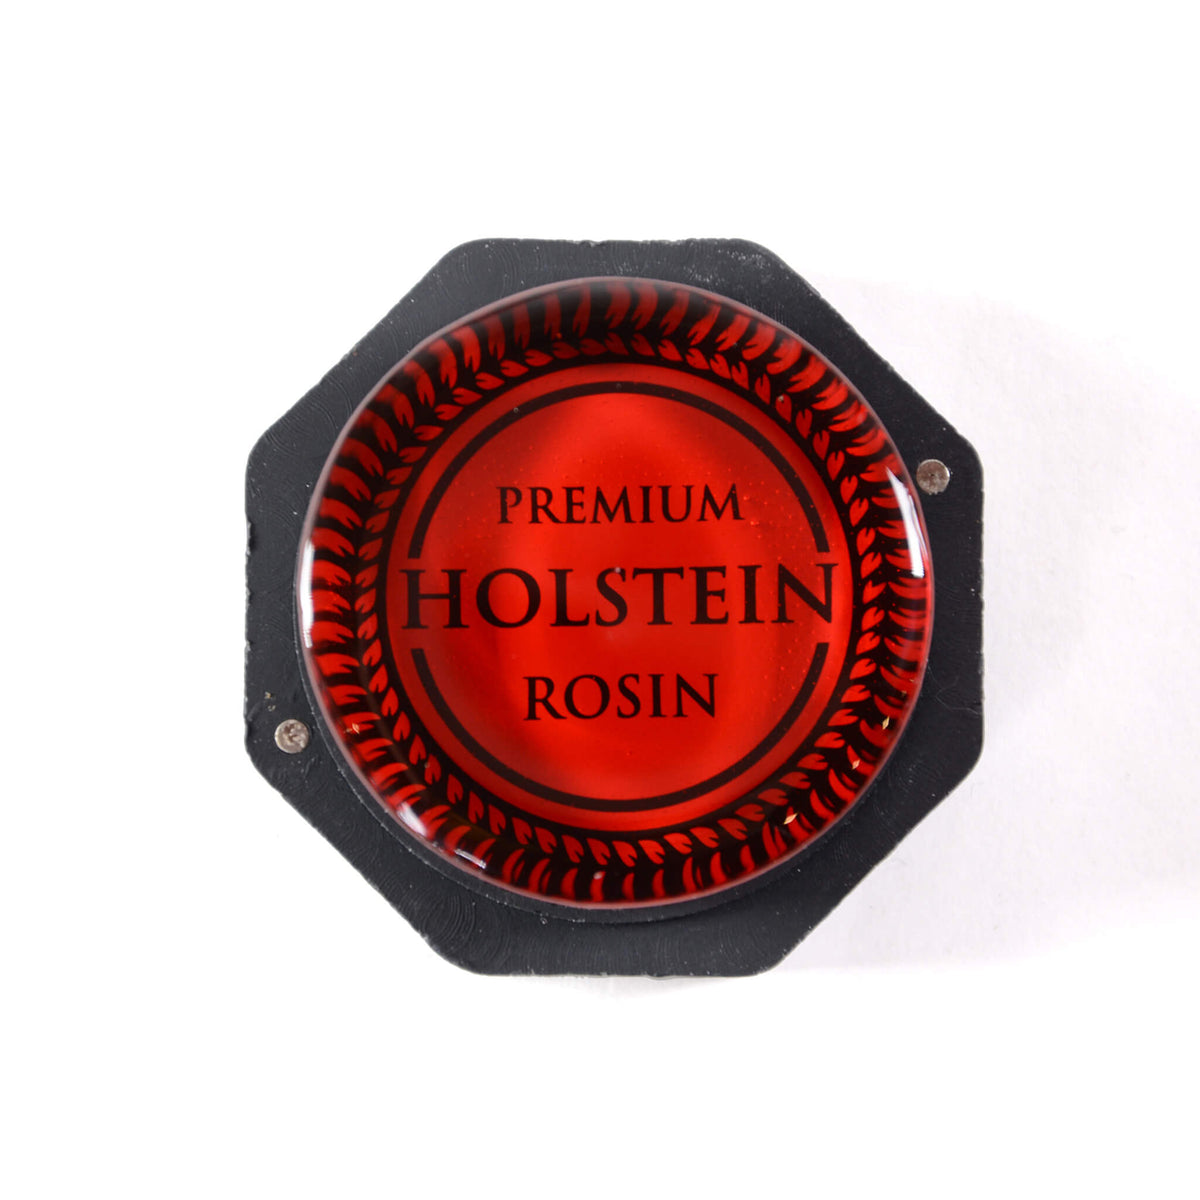 Holstein Premium Rosin